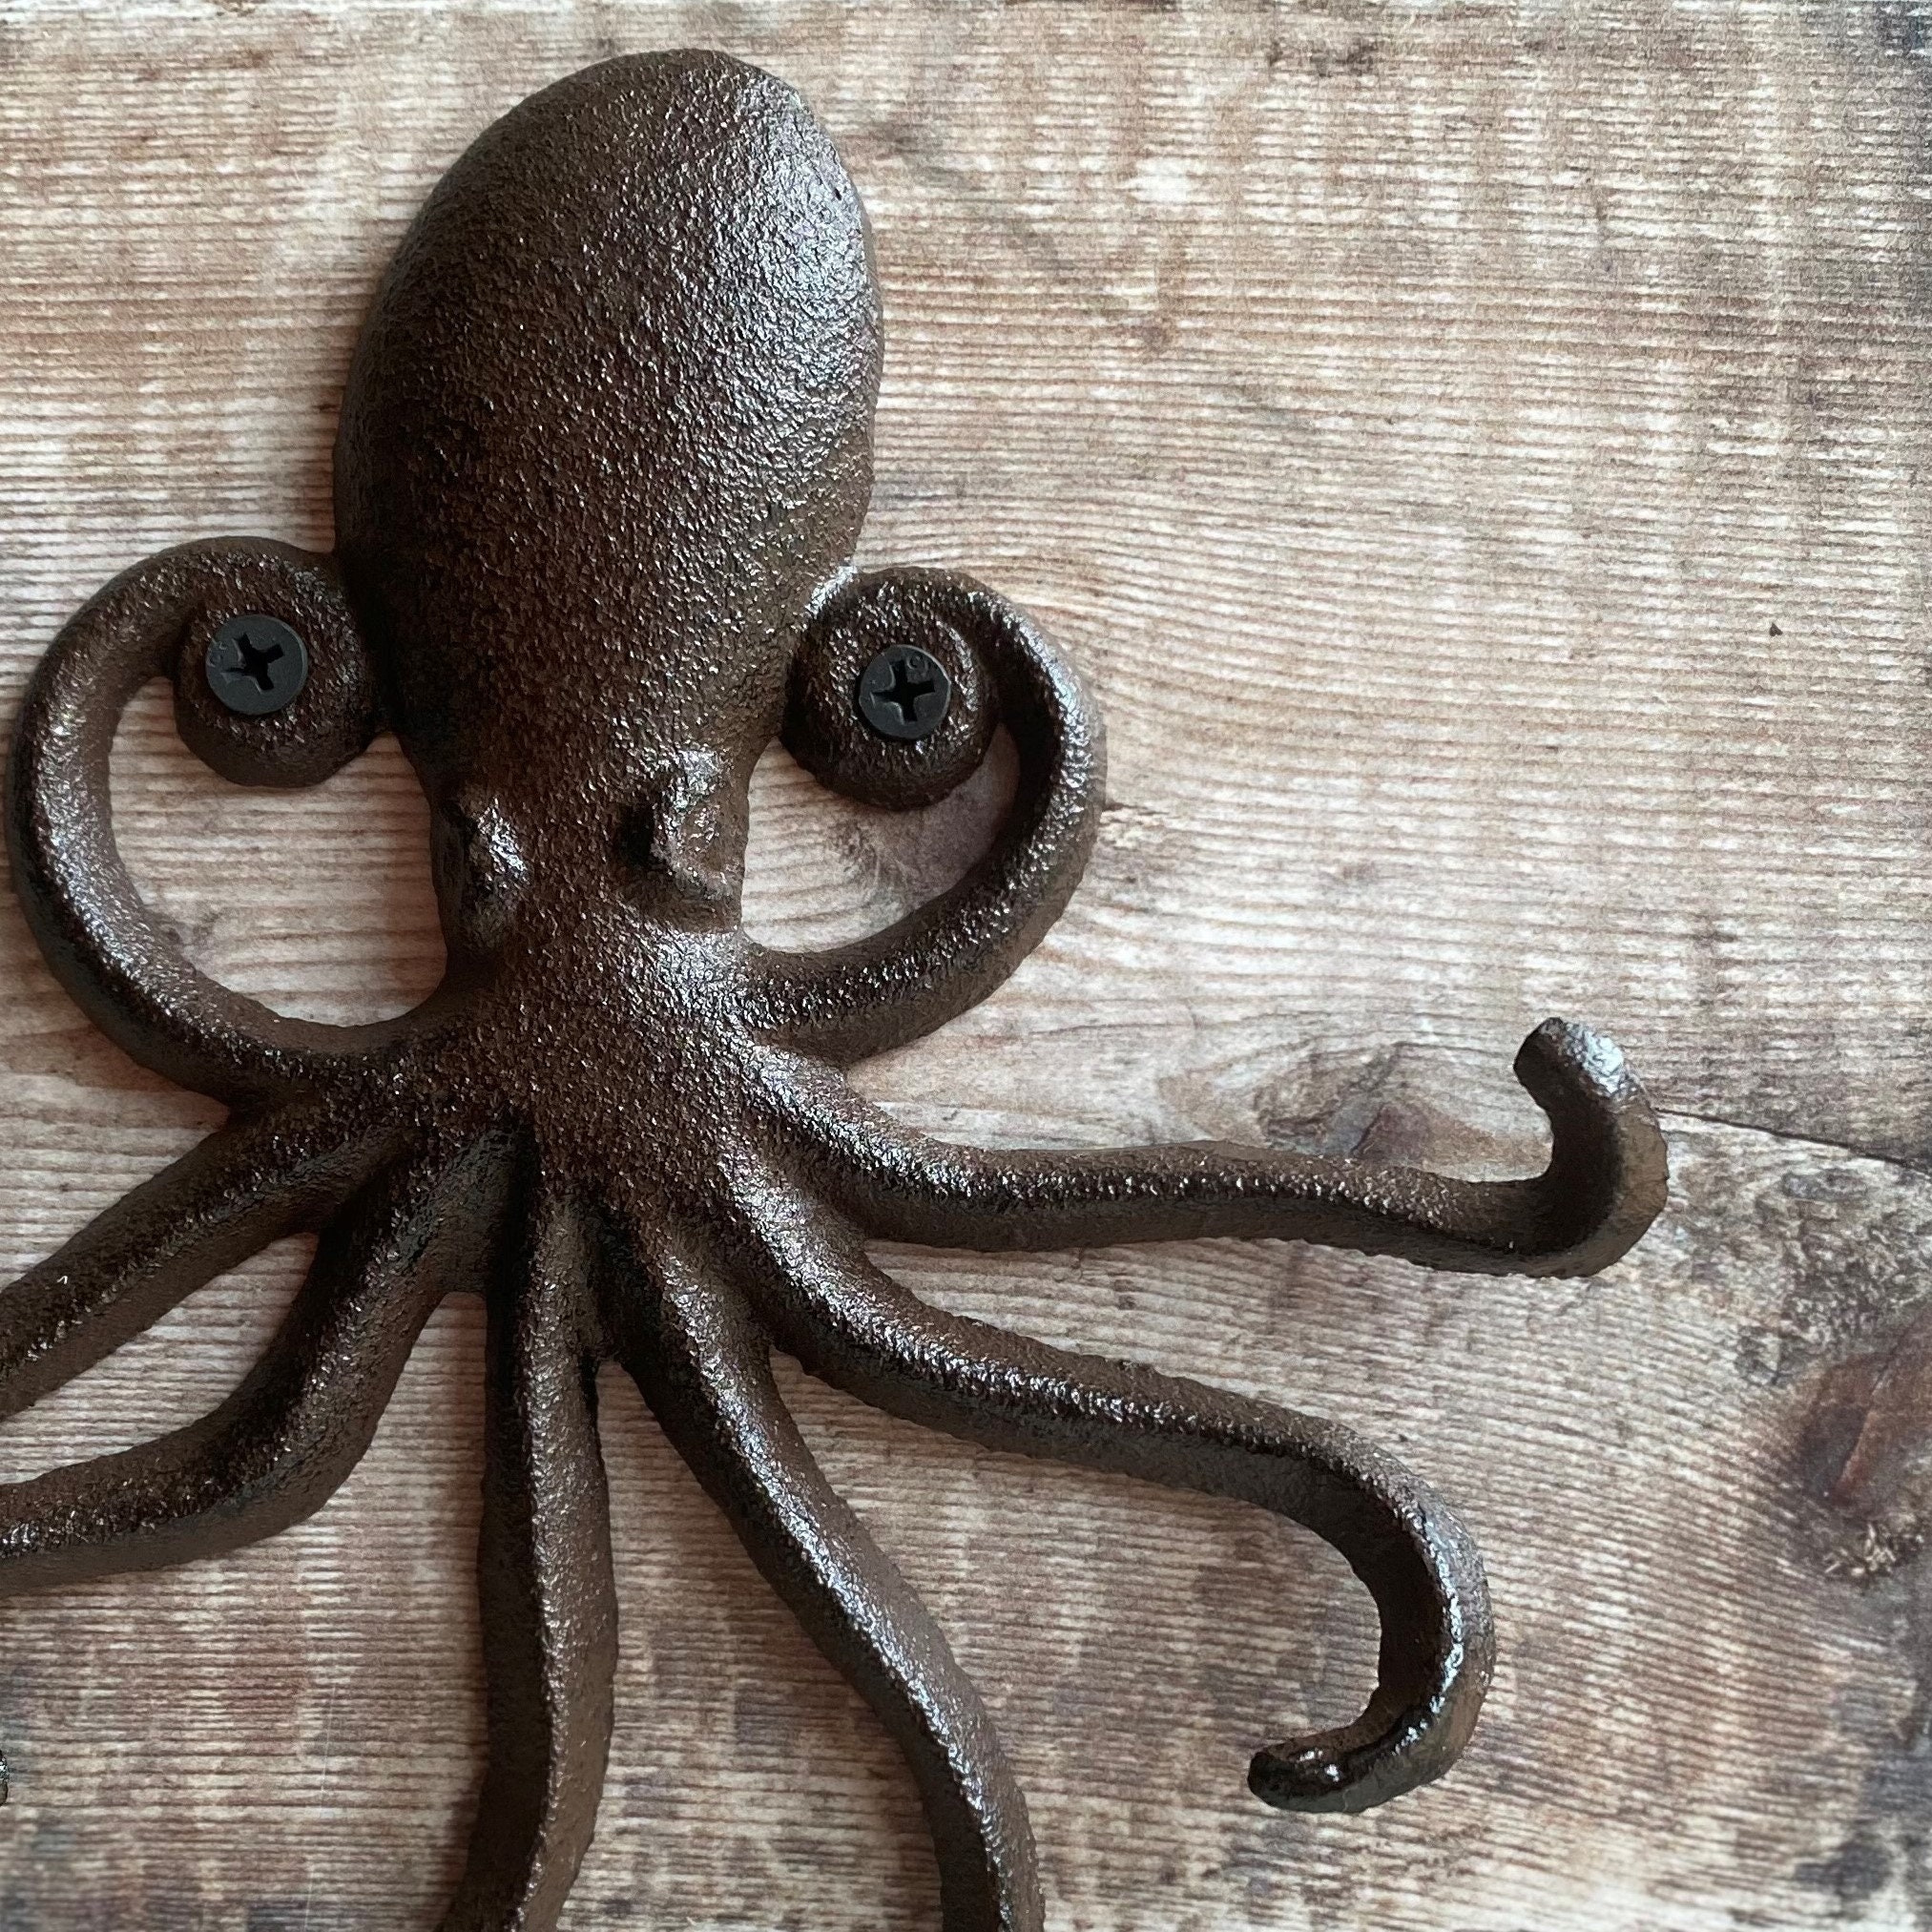 Cast Iron Octopus Wall Hook Rack for Keys, Coats, Dog Leads 